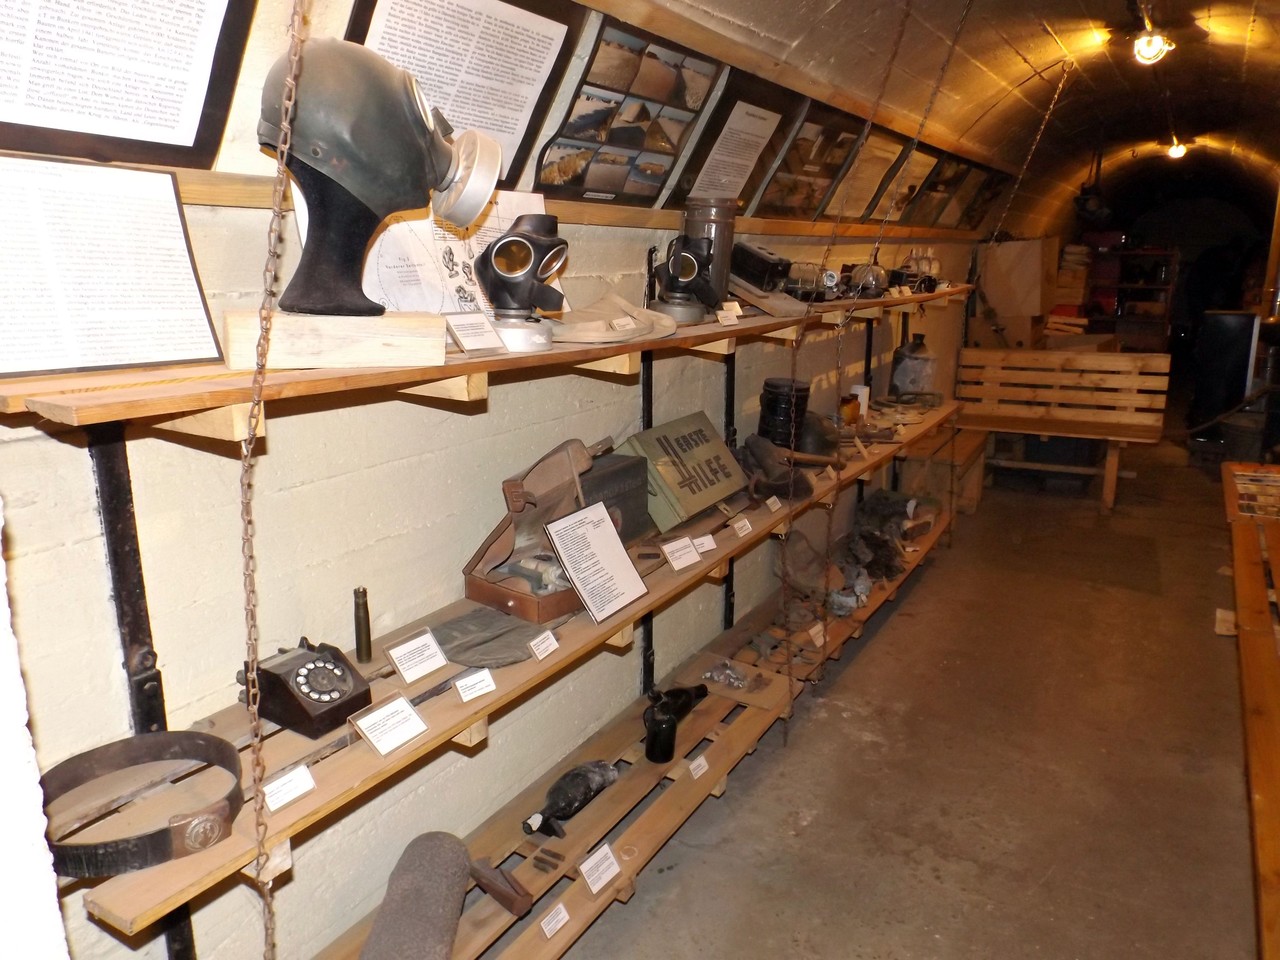 The Bunkermuseum